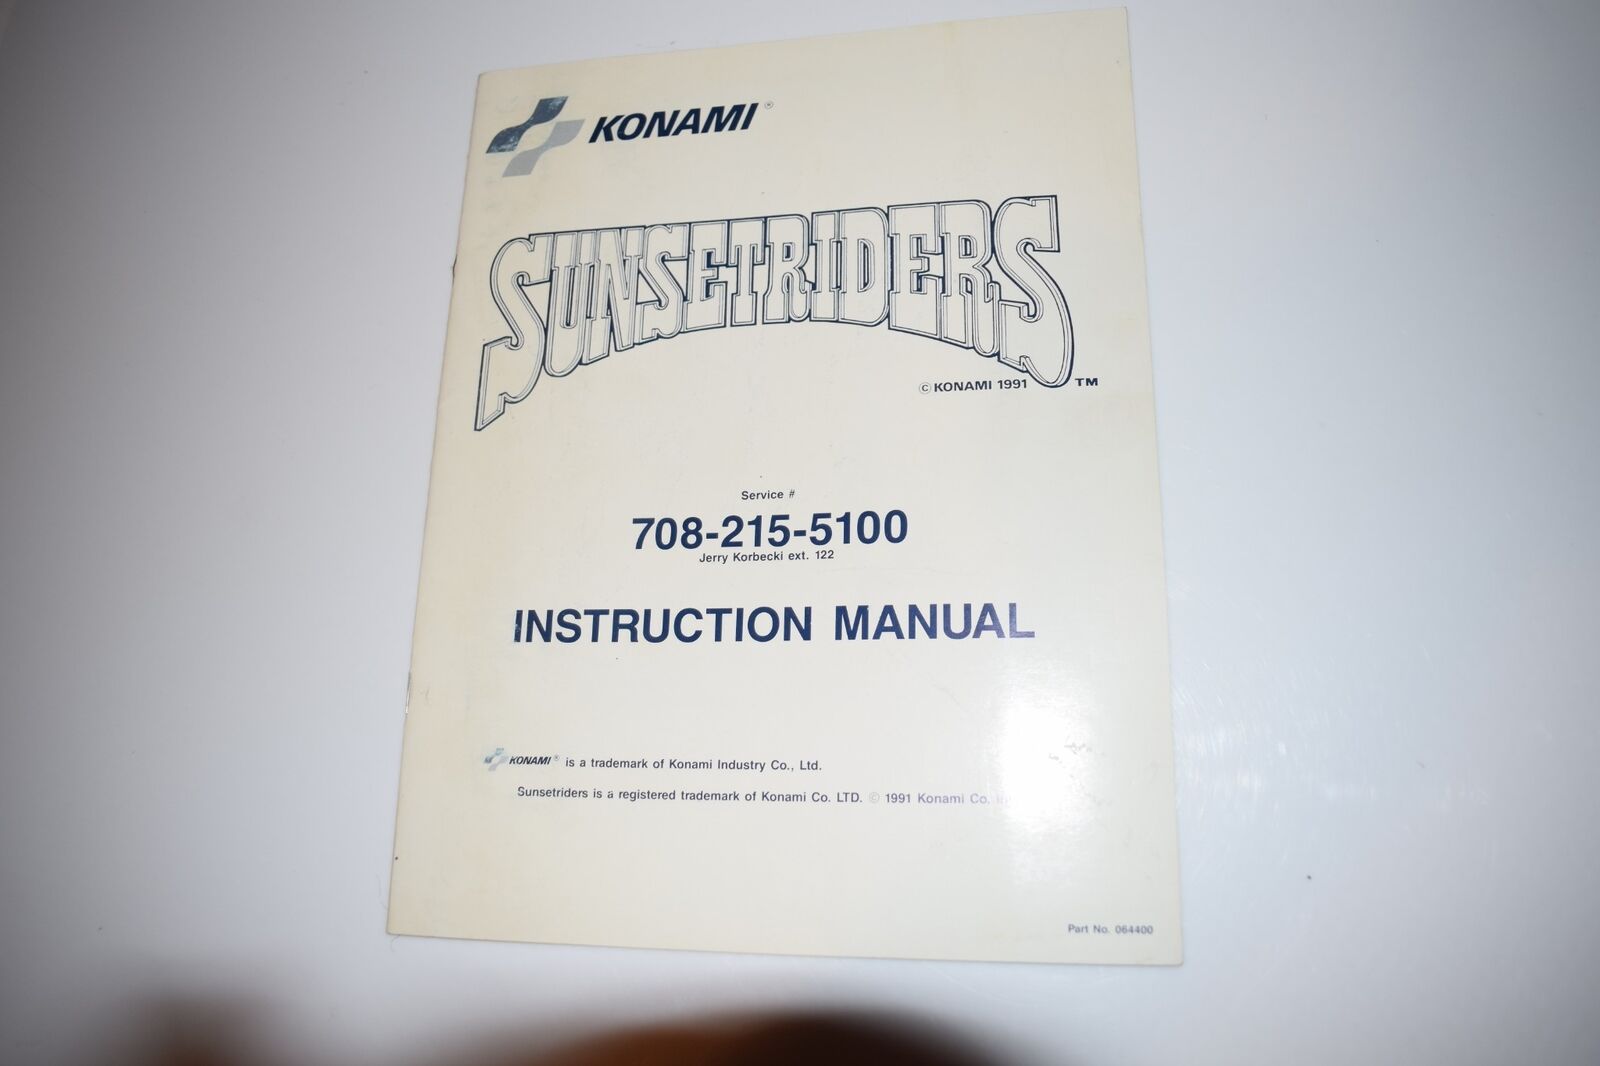 SUNSET RIDERS INSTRUCTION MANUAL KONAMI 1991 708-215-5100 (BOOK751)